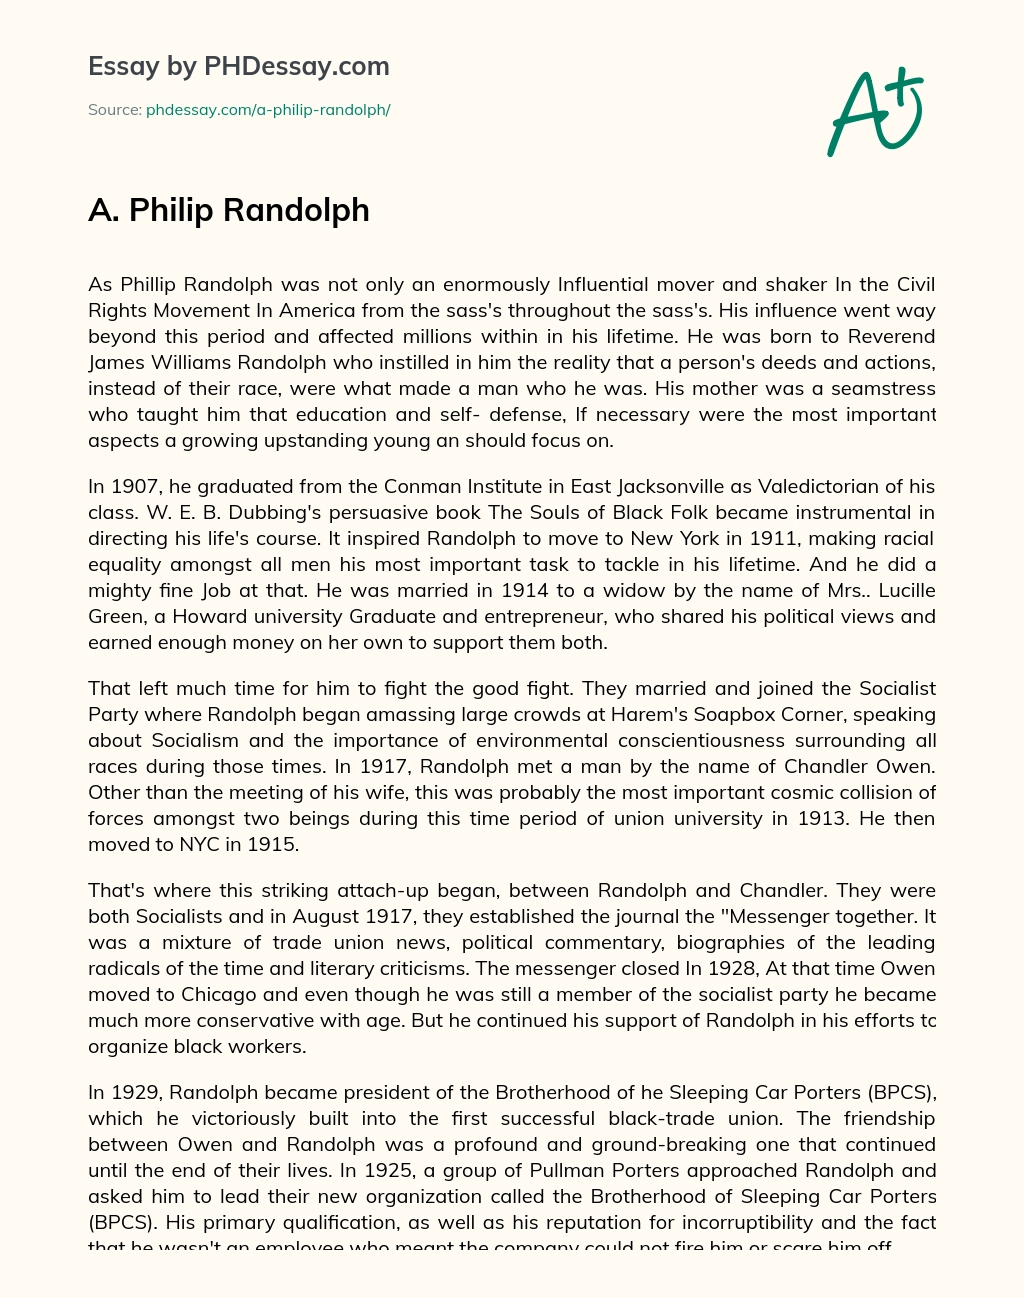 A. Philip Randolph essay